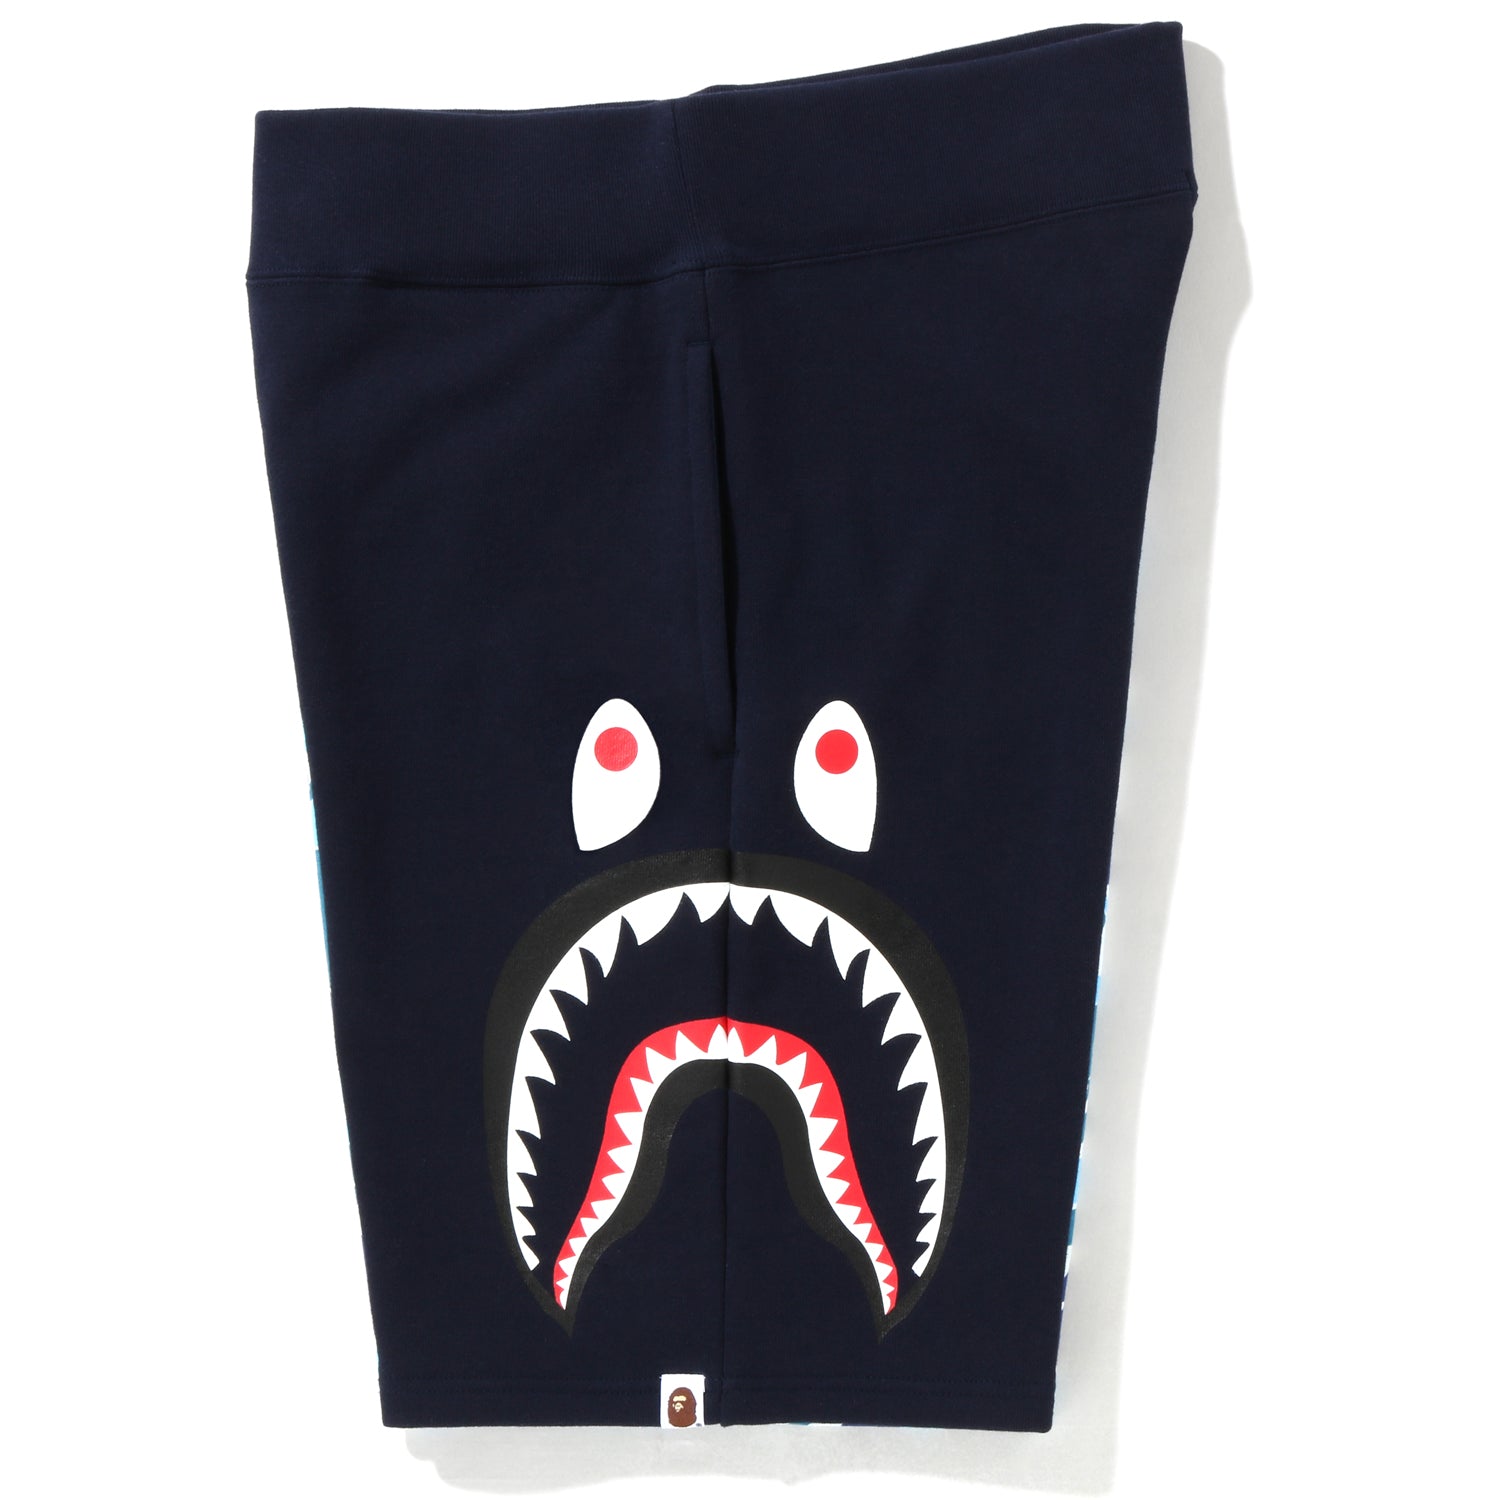 BAPE Shark Sweat Shorts Black/Black